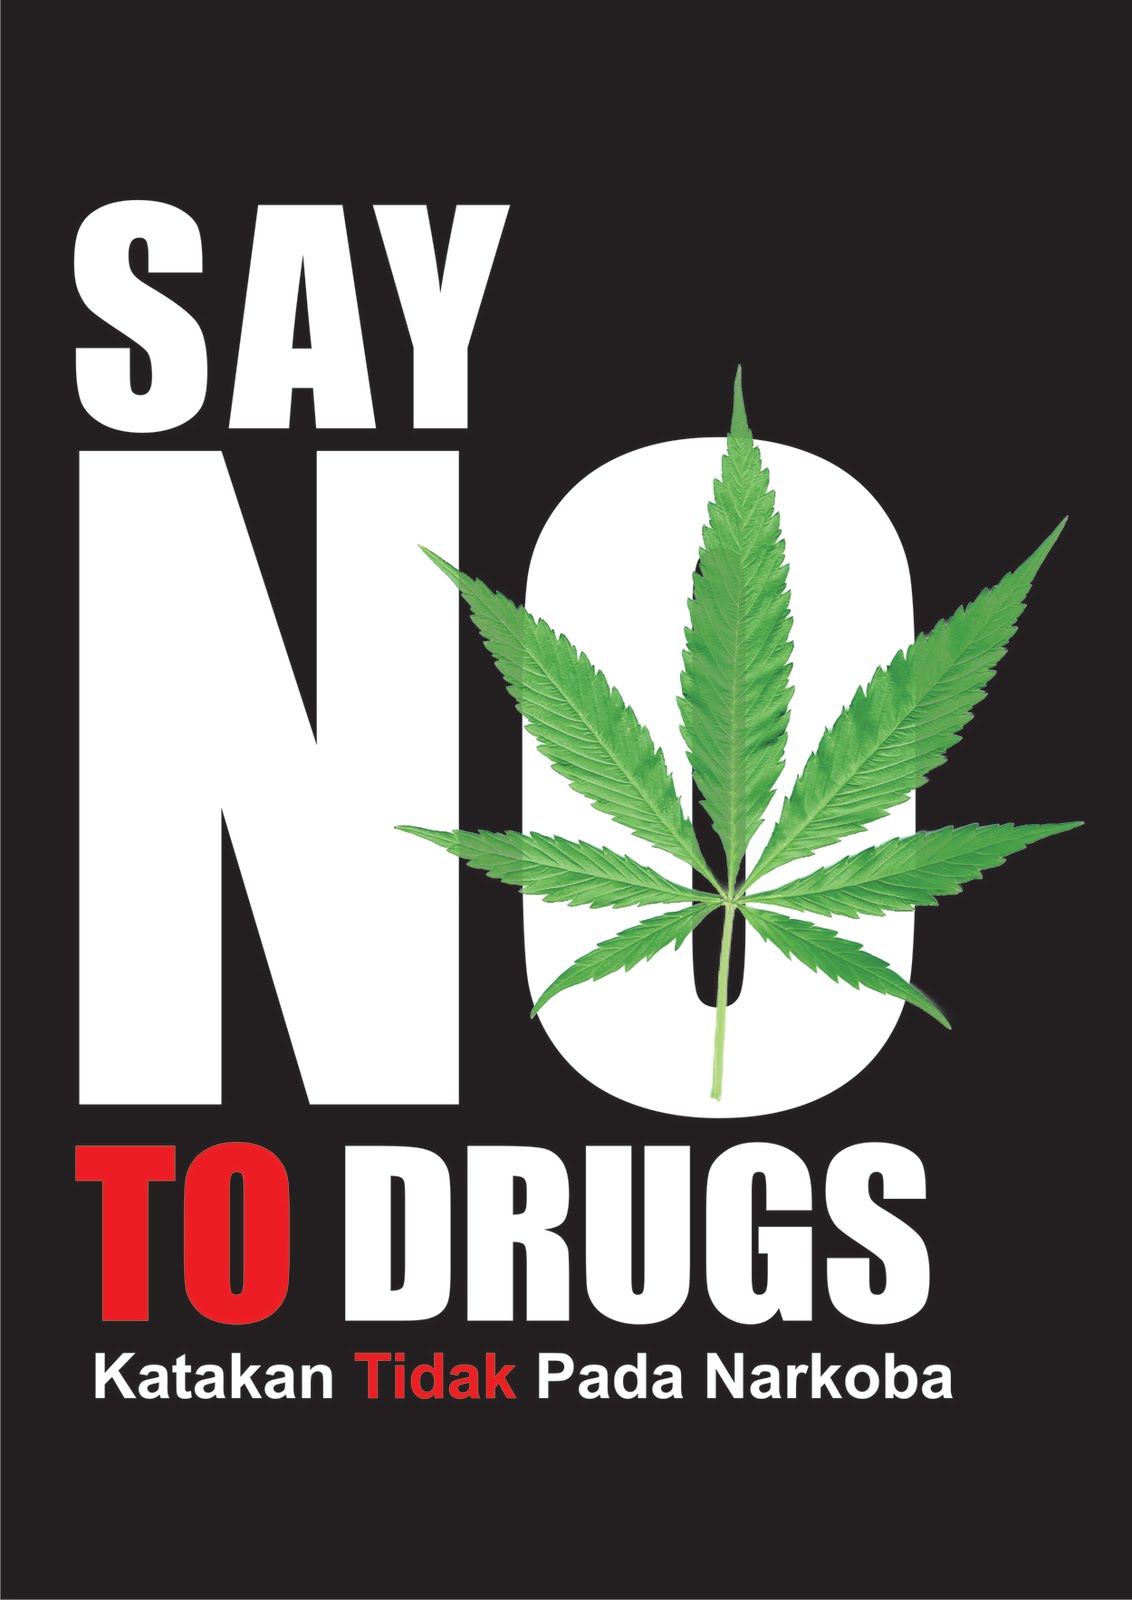  Poster  Anti Narkoba  Mulyono Blog s